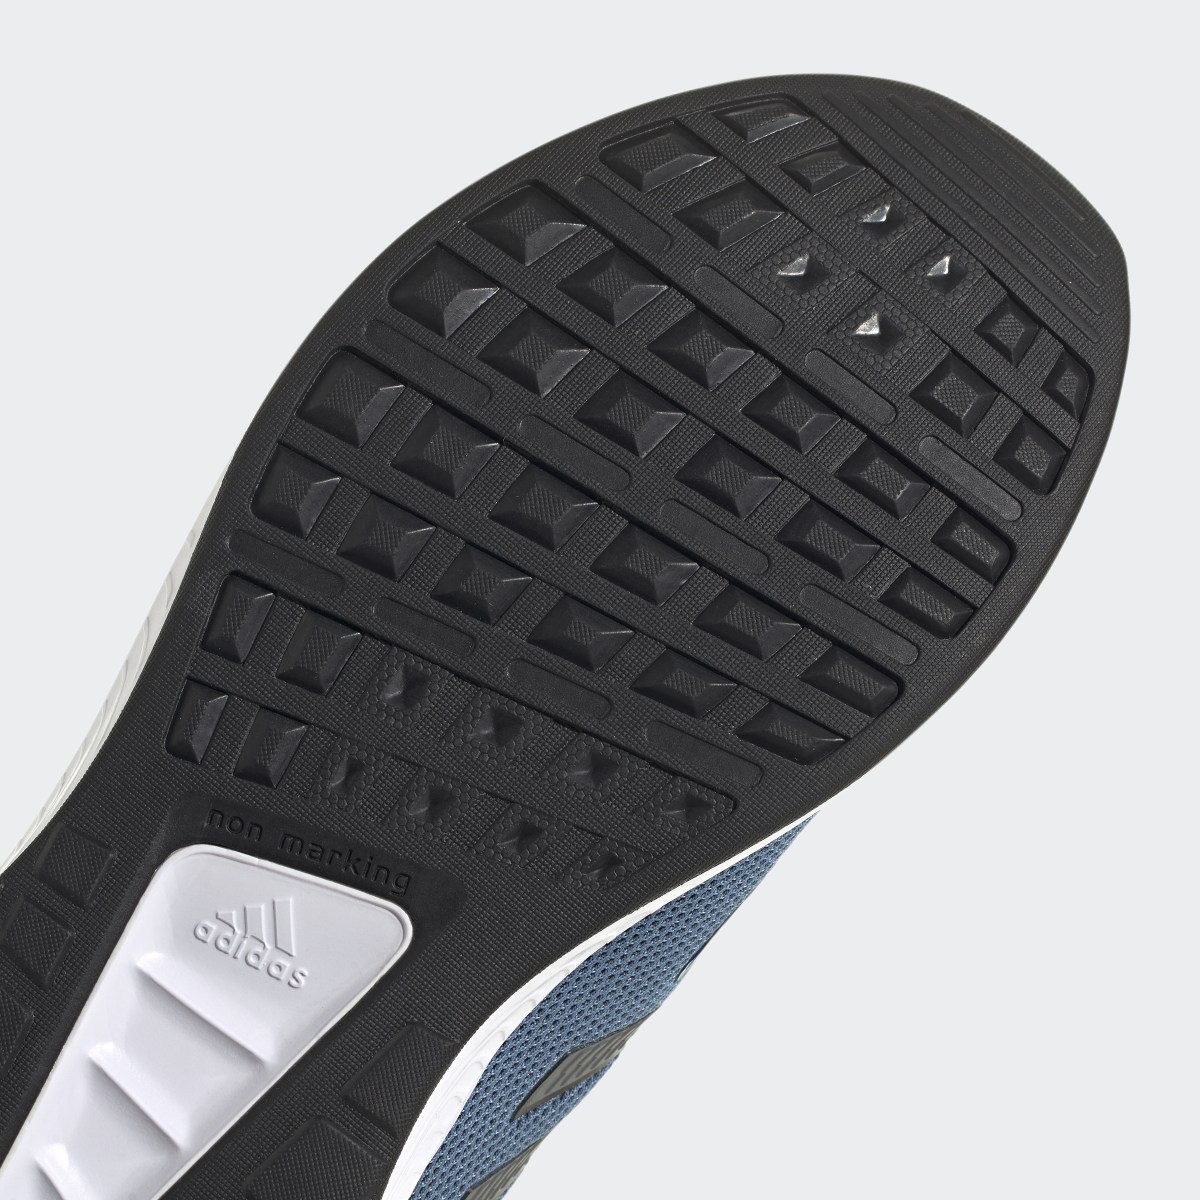 Adidas Run Falcon 2.0 Ayakkabı. 8